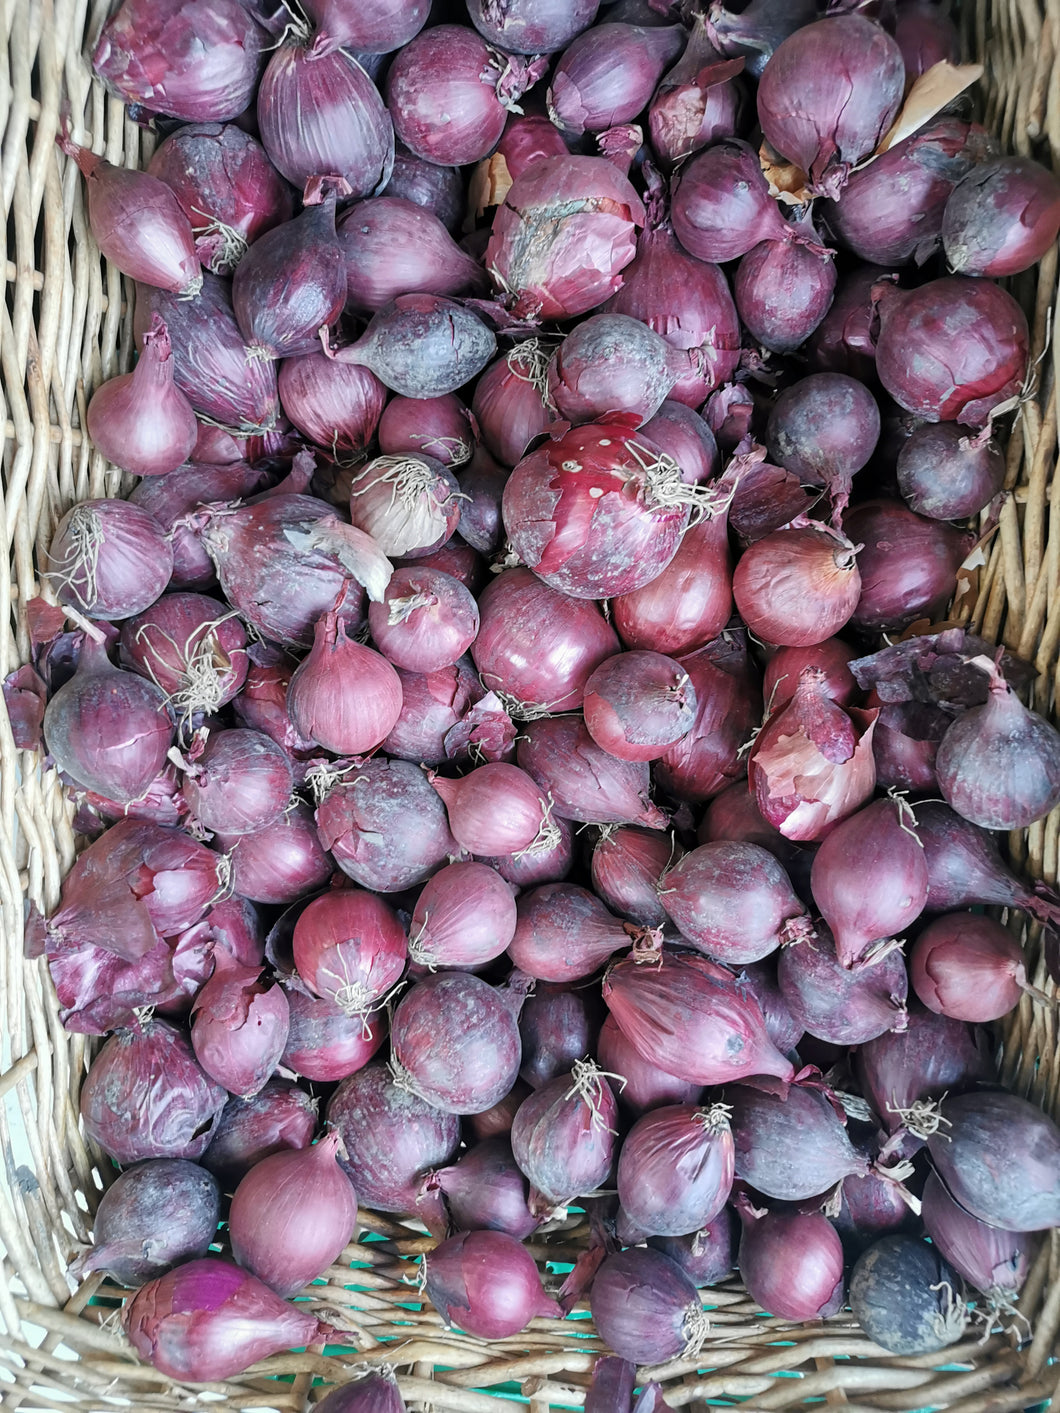 Organic Red Onions - €1.75 per 500g